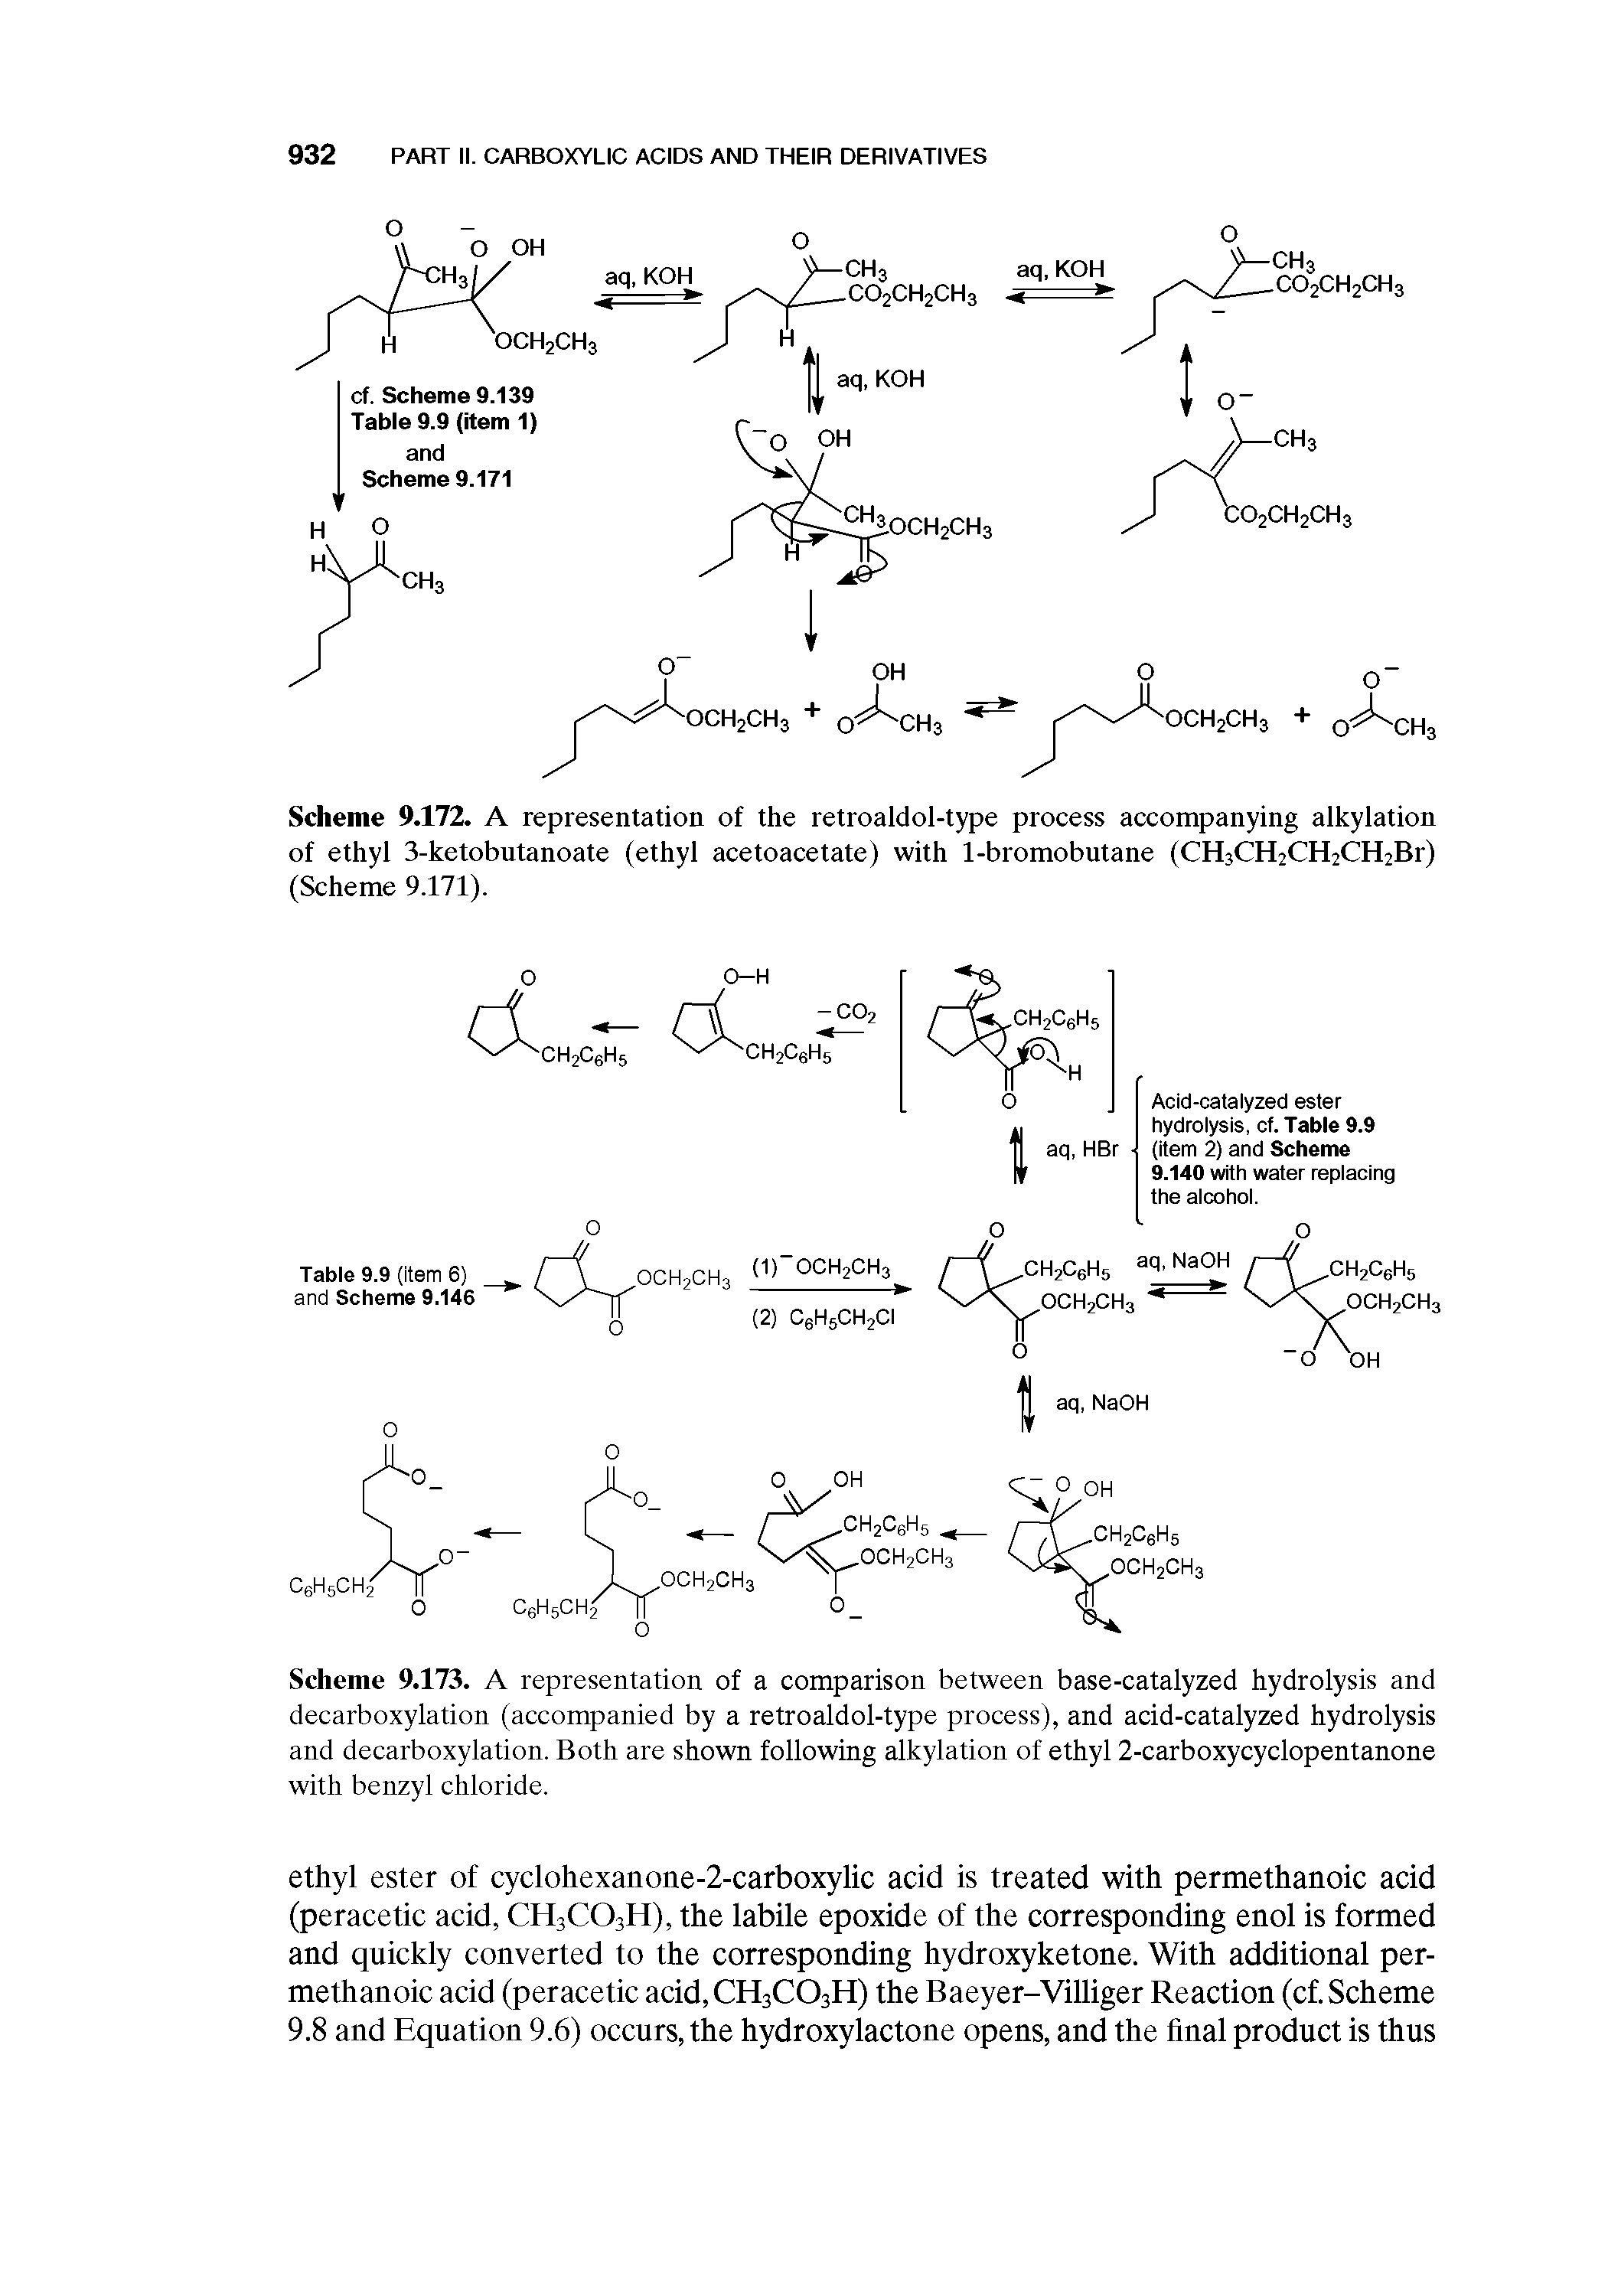 Scheme 9.172. A representation of the retroaldol-type process accompanying alkylation of ethyl 3-ketobutanoate (ethyl acetoacetate) with 1-bromobutane (CHjCH2CH2CH2Br) (Scheme 9.171).